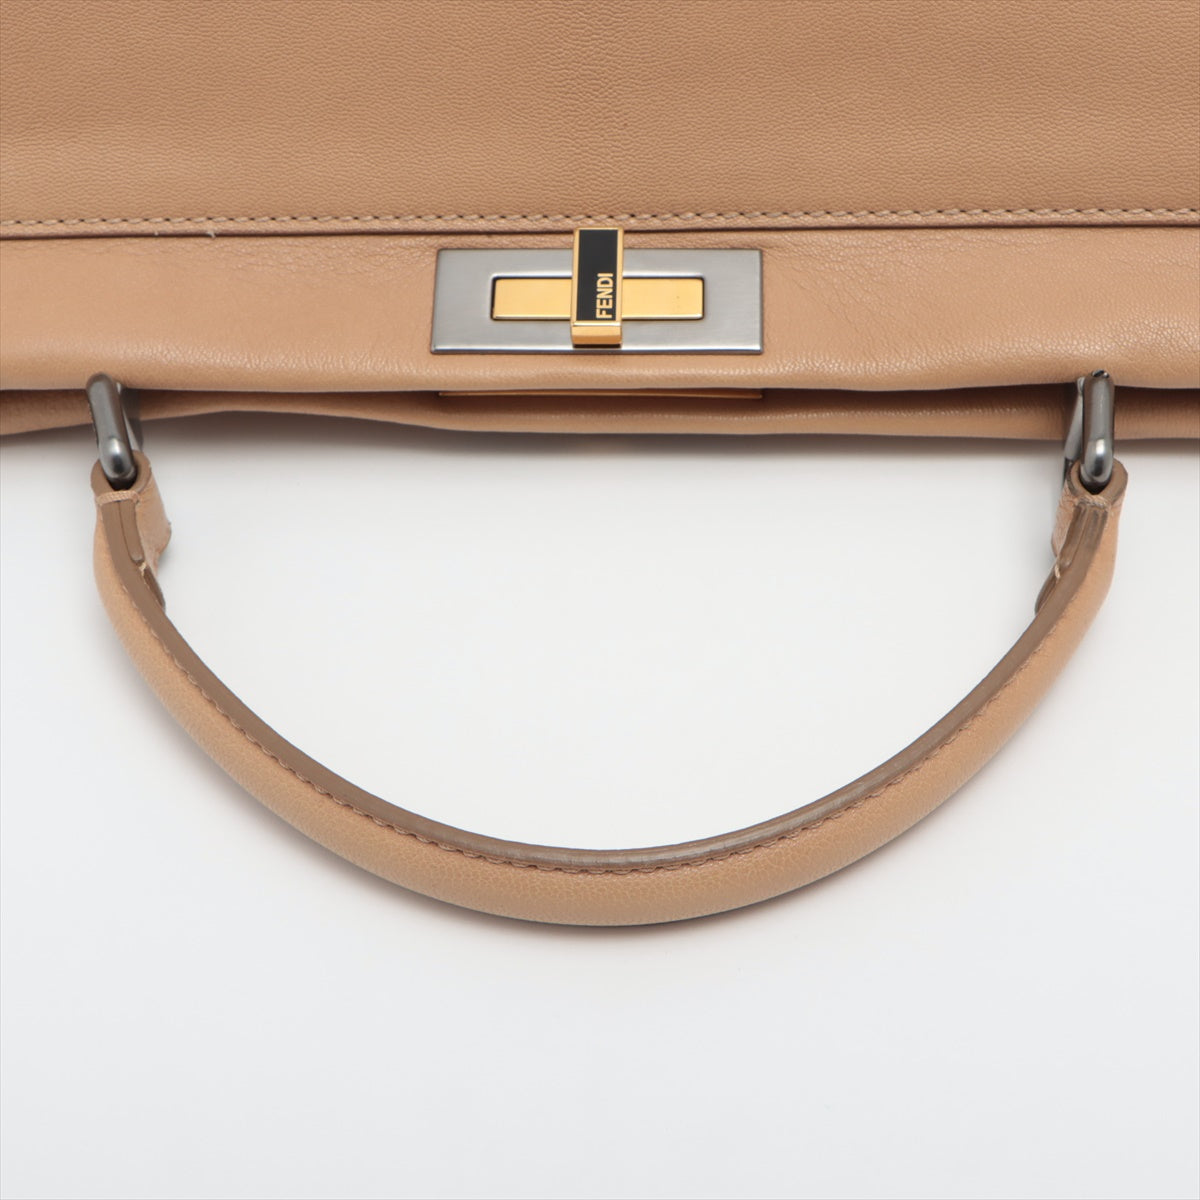 Fendi Peek-a-boo Large Leather 2way handbag Beige 8BN210